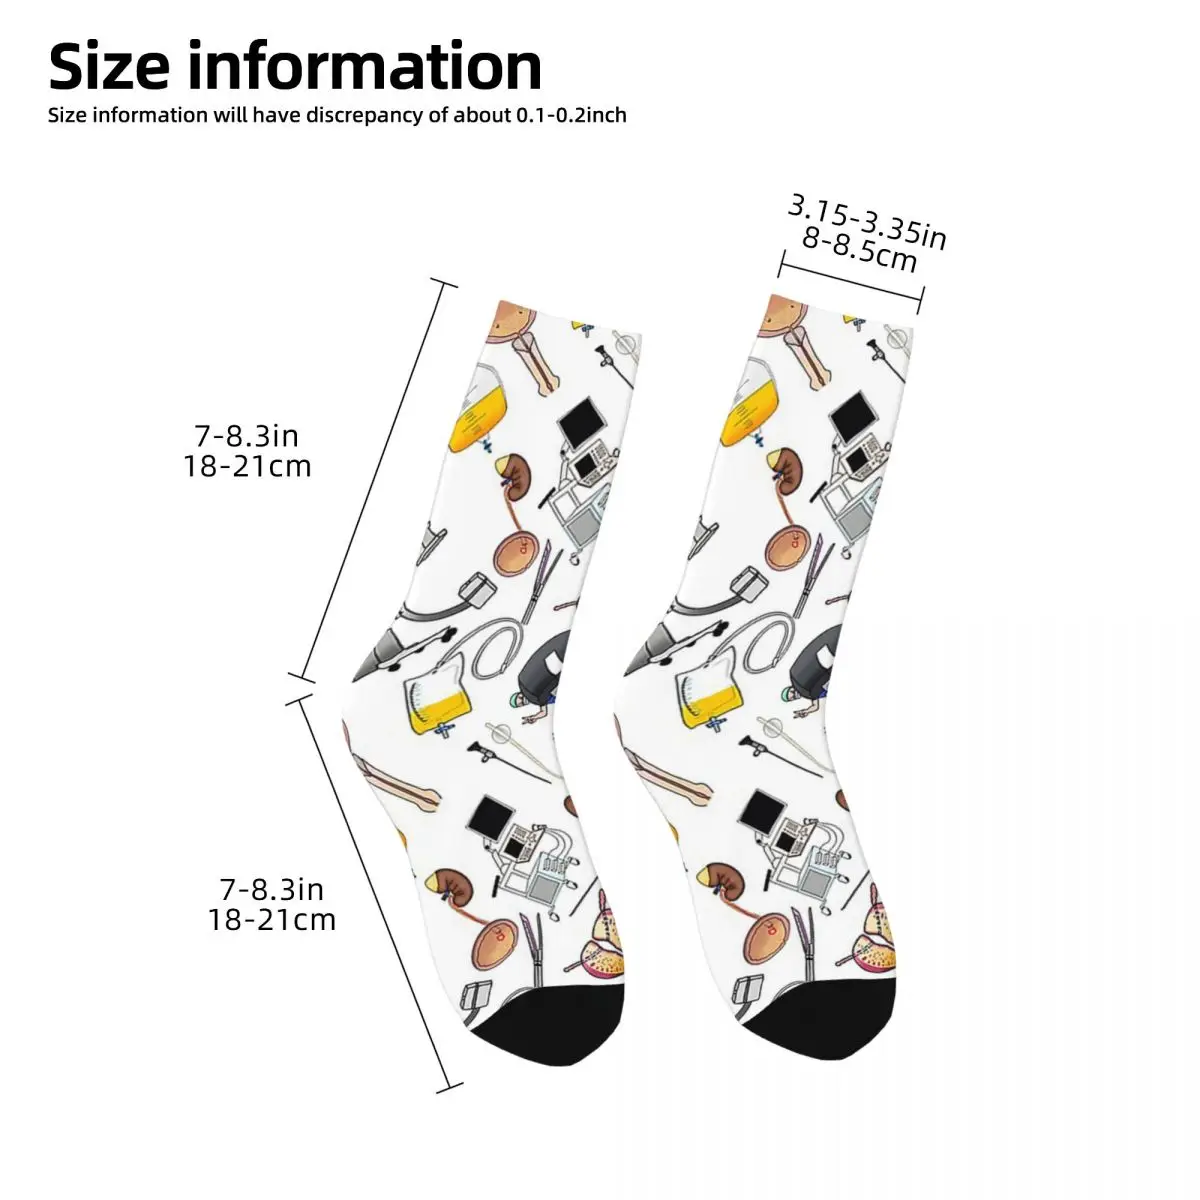 Calzini per urologia Harajuku calze assorbenti per il sudore calze lunghe per tutte le stagioni accessori per regali Unisex